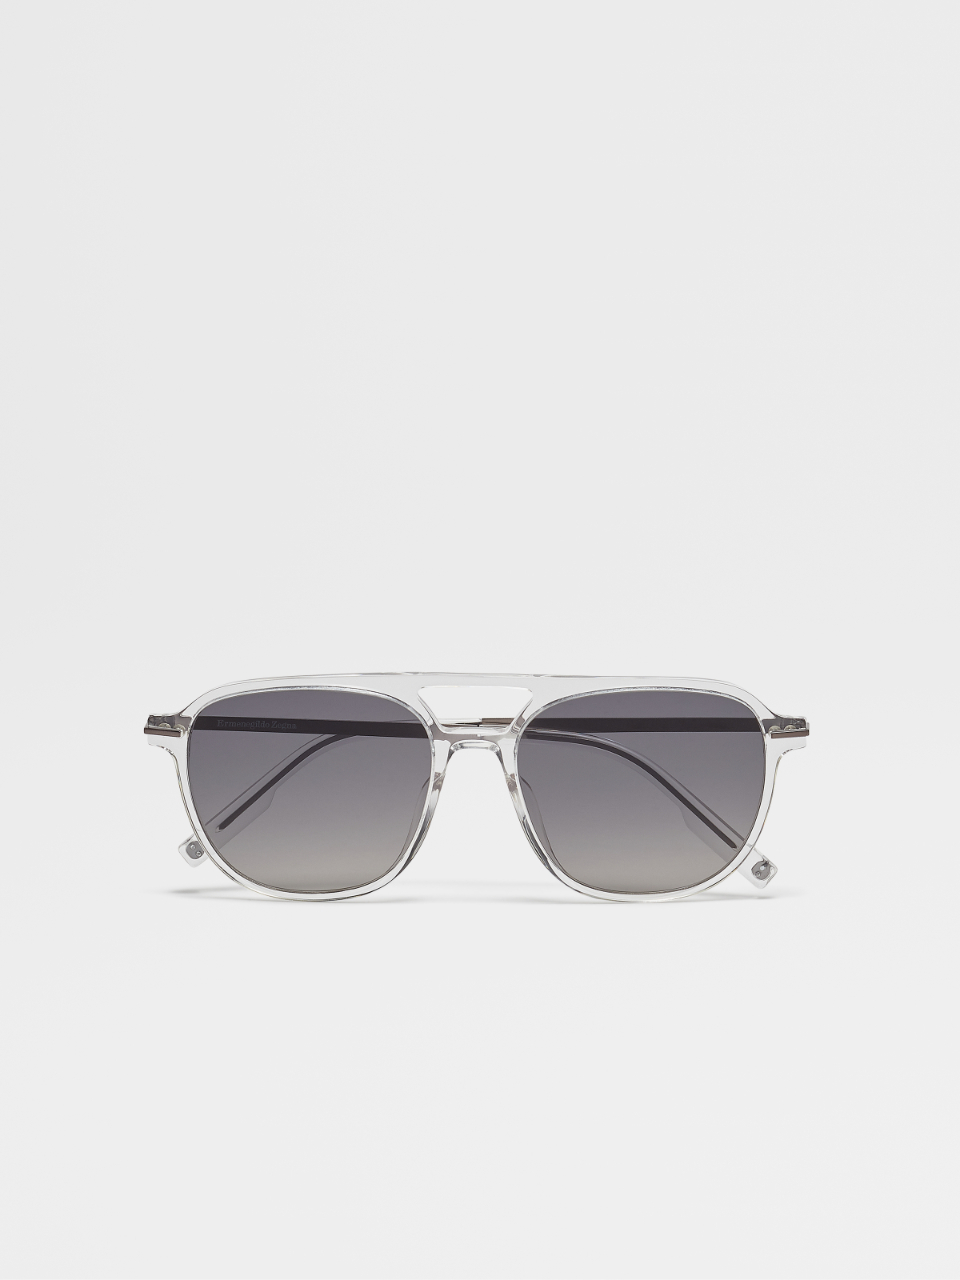 Crystal Leggerissimo Metal and Acetate Caravan Sunglasses